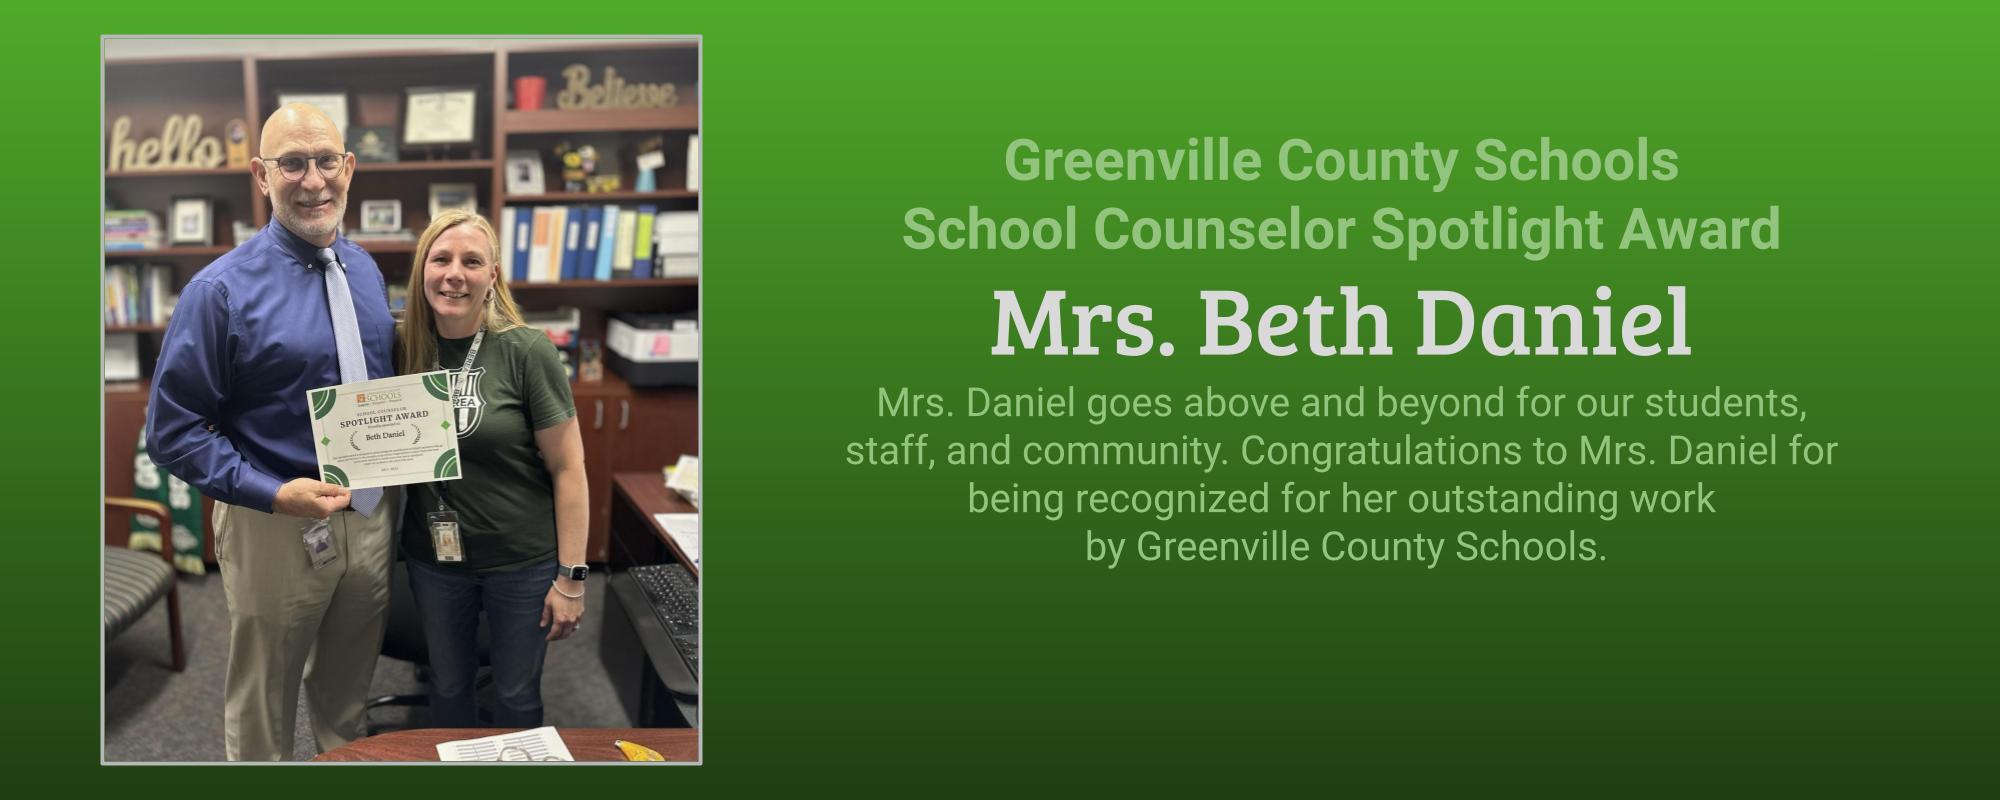 Beth Daniel counselor spotlight greenville county schools